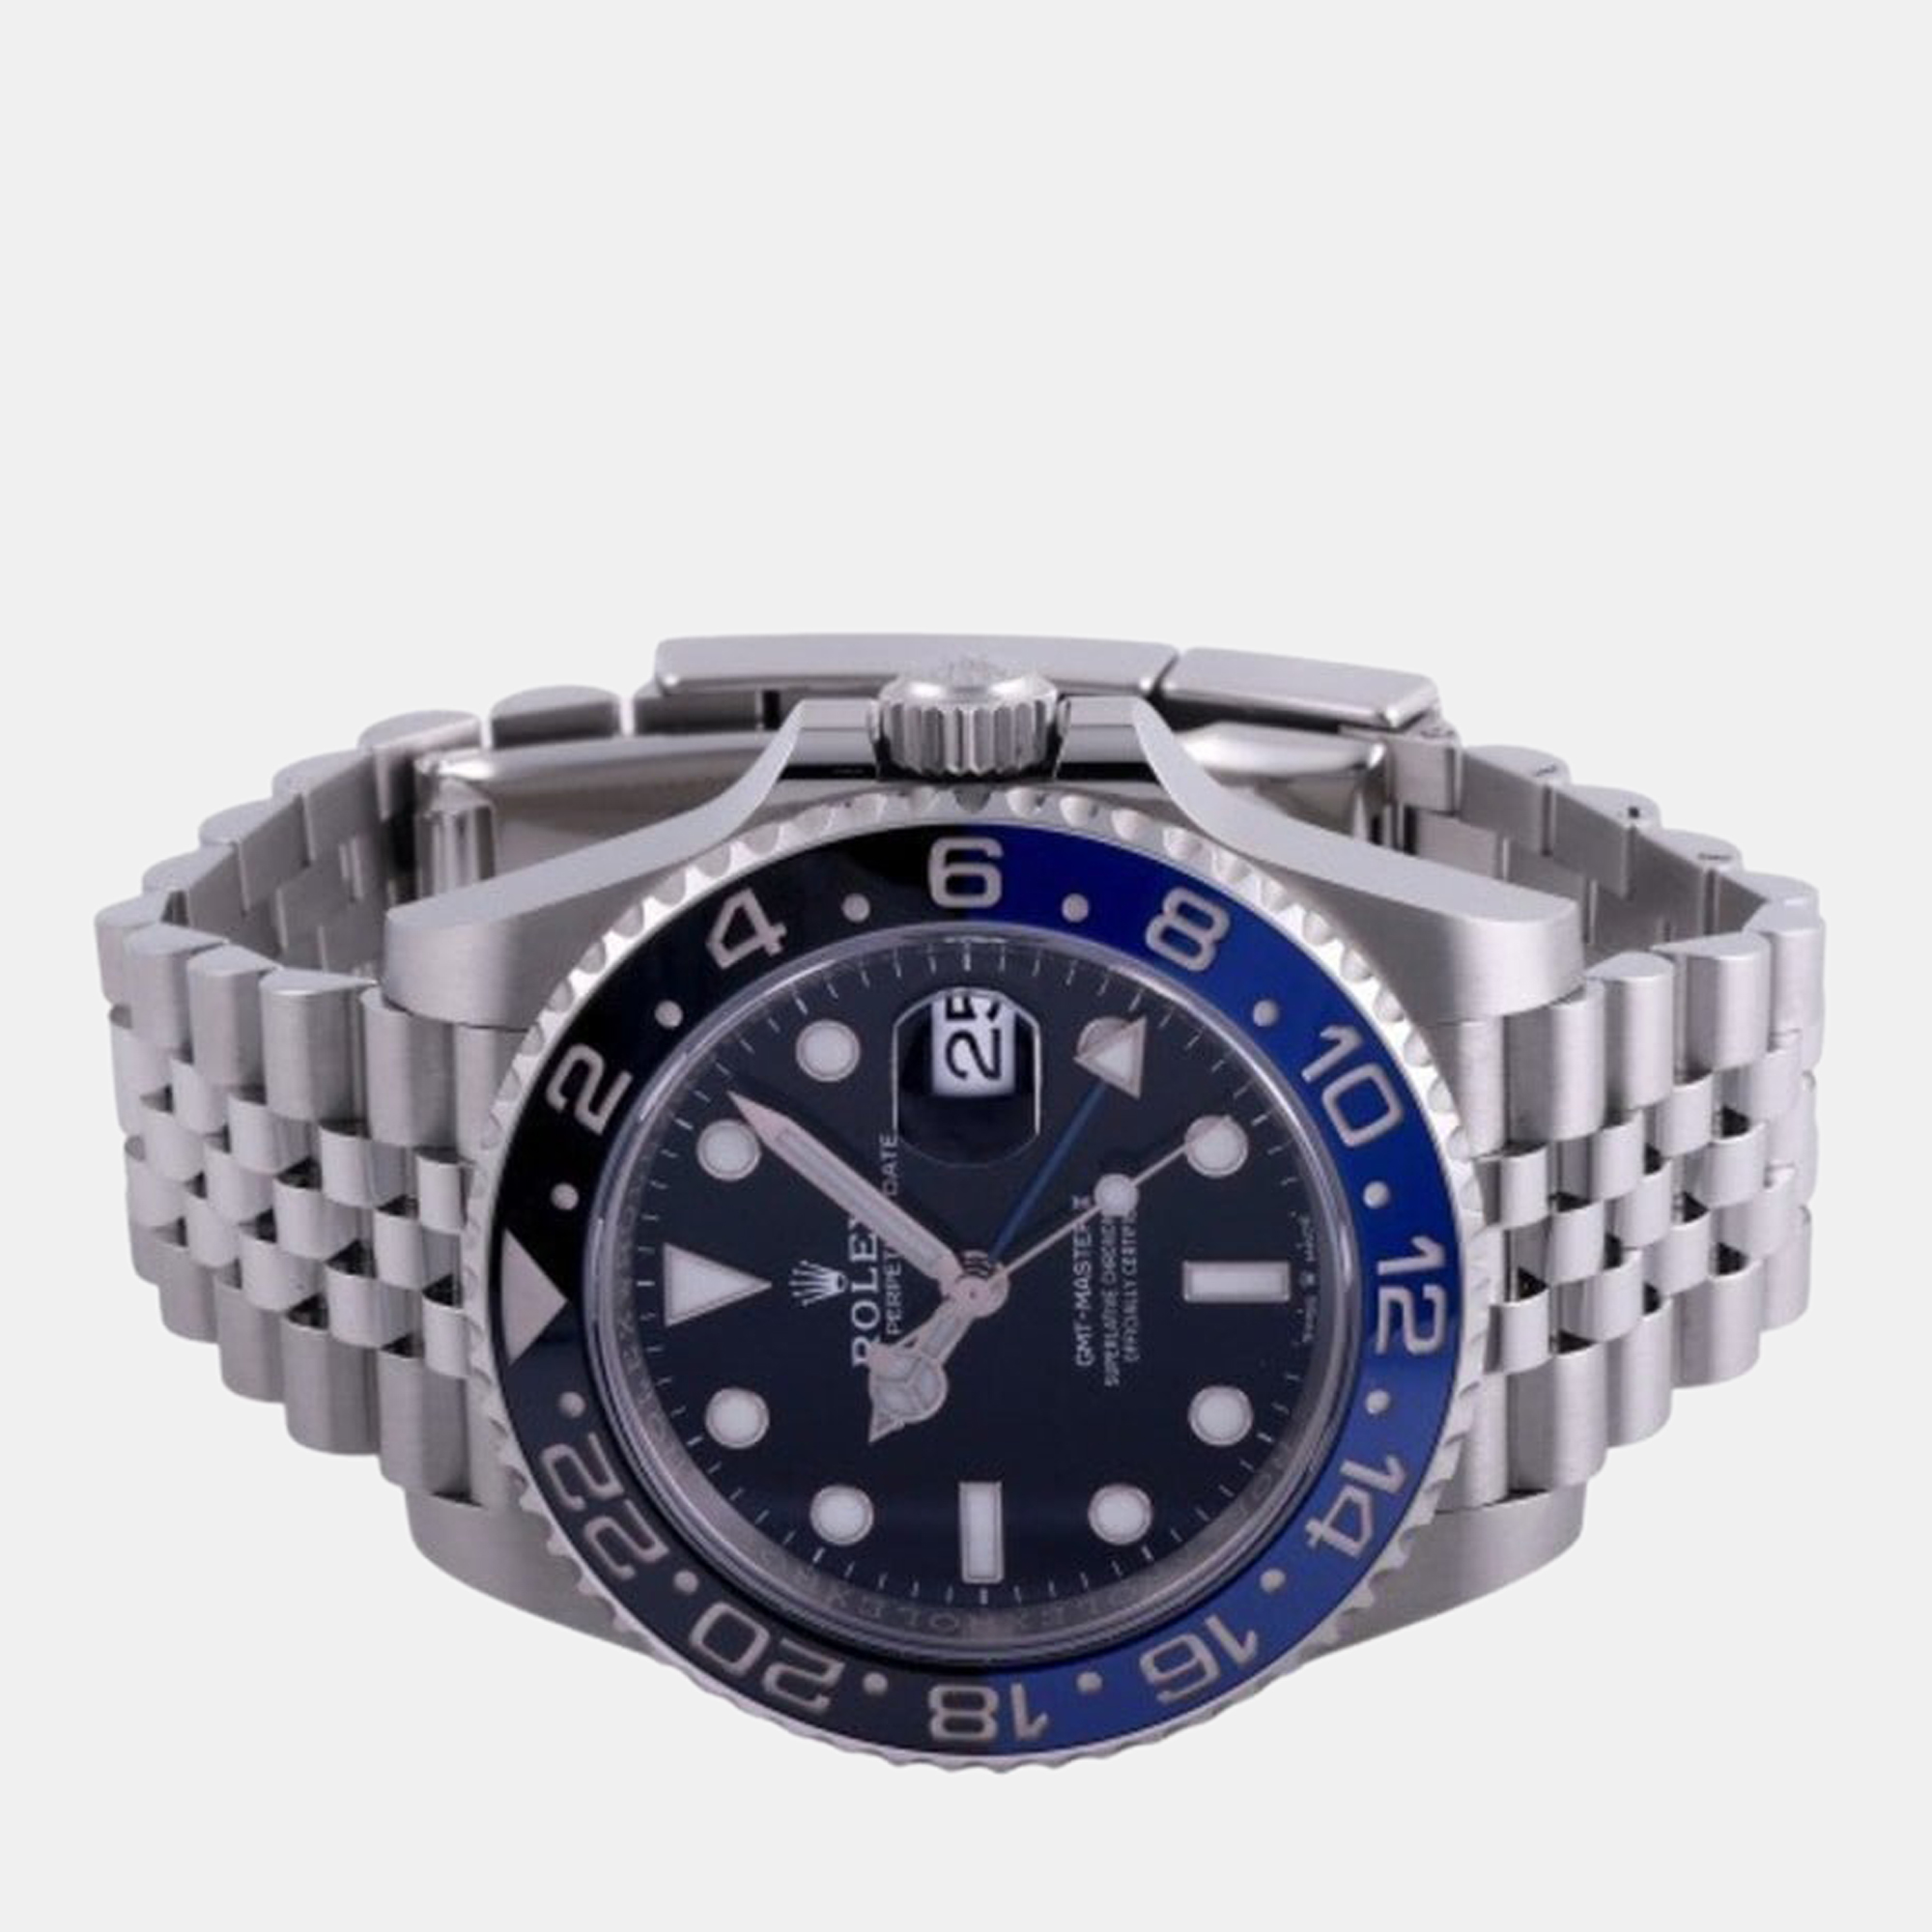 

Rolex Black Stainless Steel GMT-Master II 126710BLNR Automatic Men's Wristwatch 40 mm